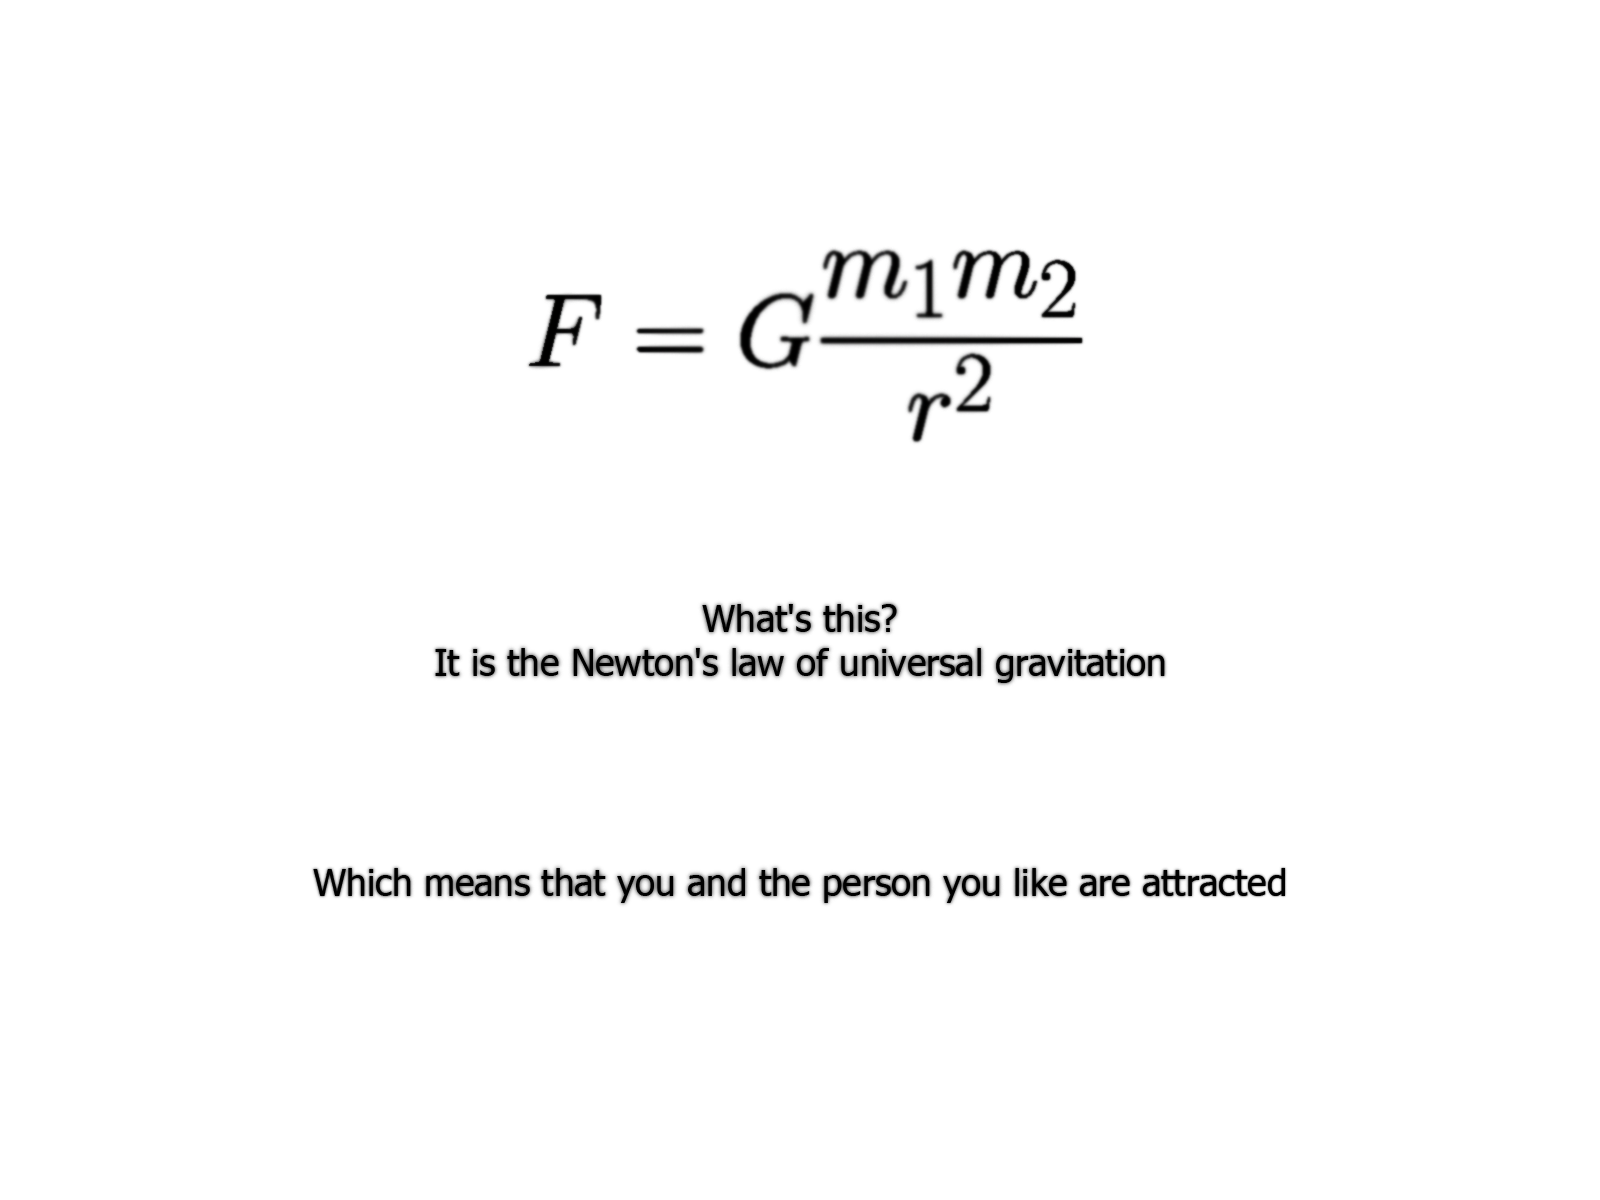 The Newton's Law